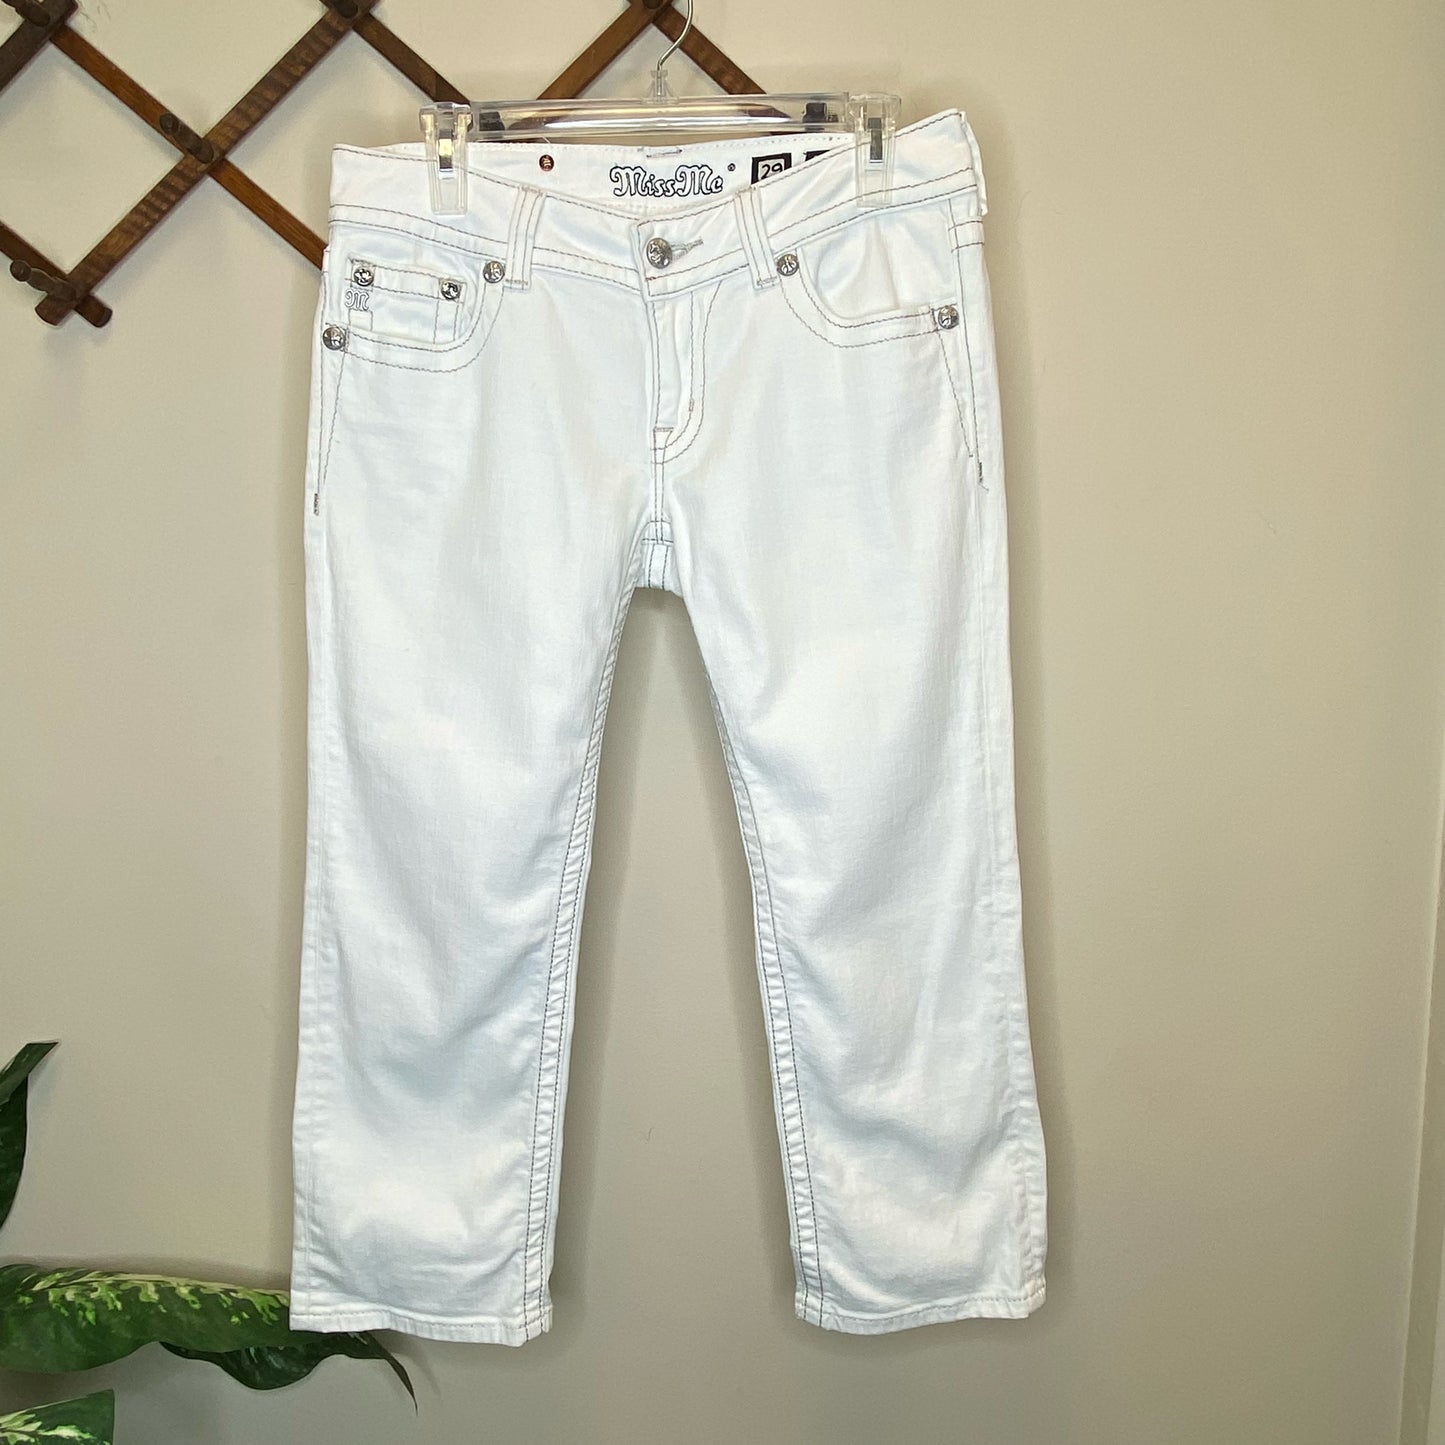 Miss Me Cropped Capri Jeans - Size 29 (7/8)